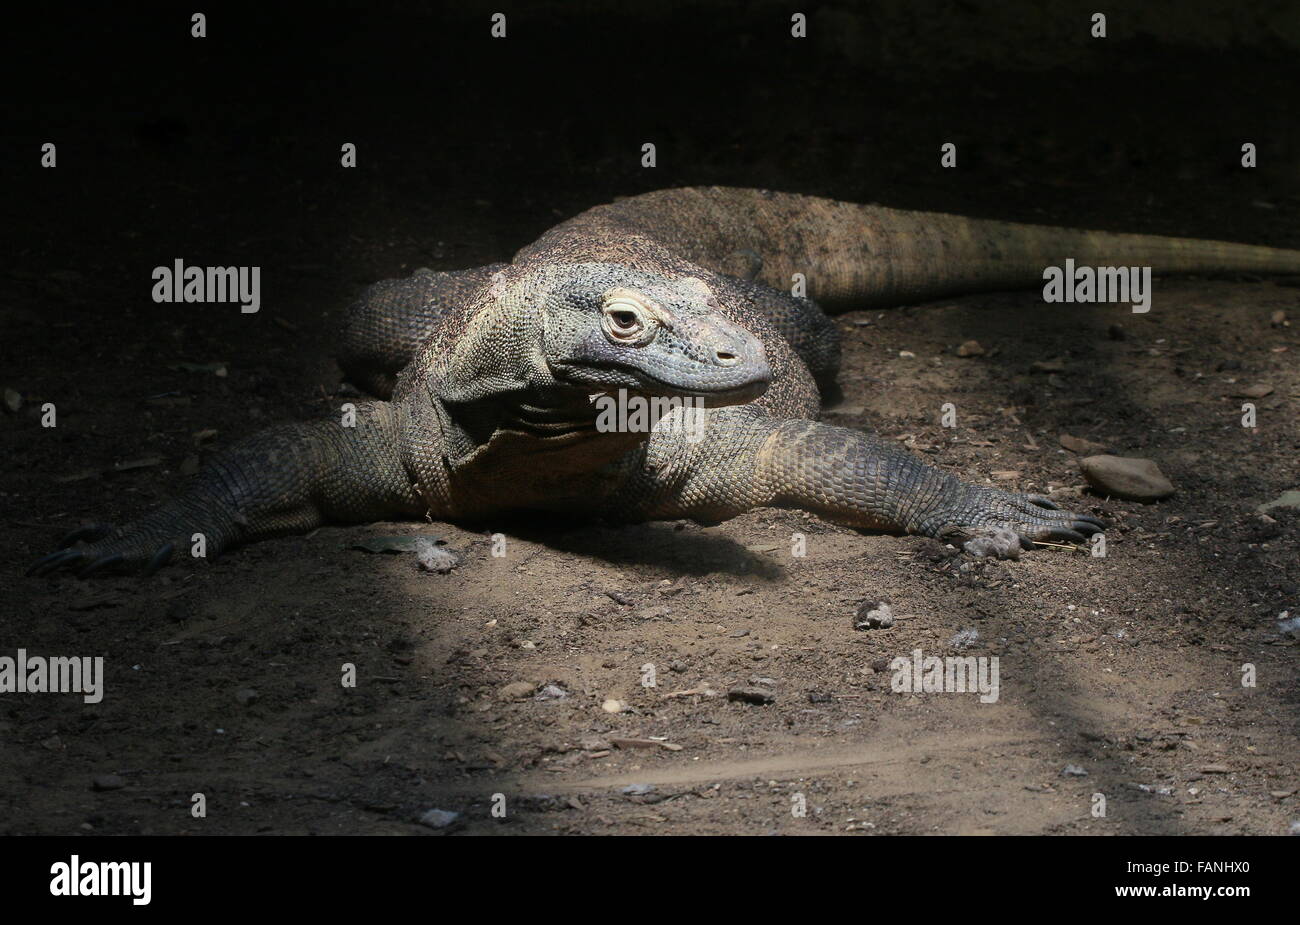 Komodo dragon (Varanus komodoensis), a.k.a Indonesian Komodo monitor lizard, largest lizard in the world. Stock Photo